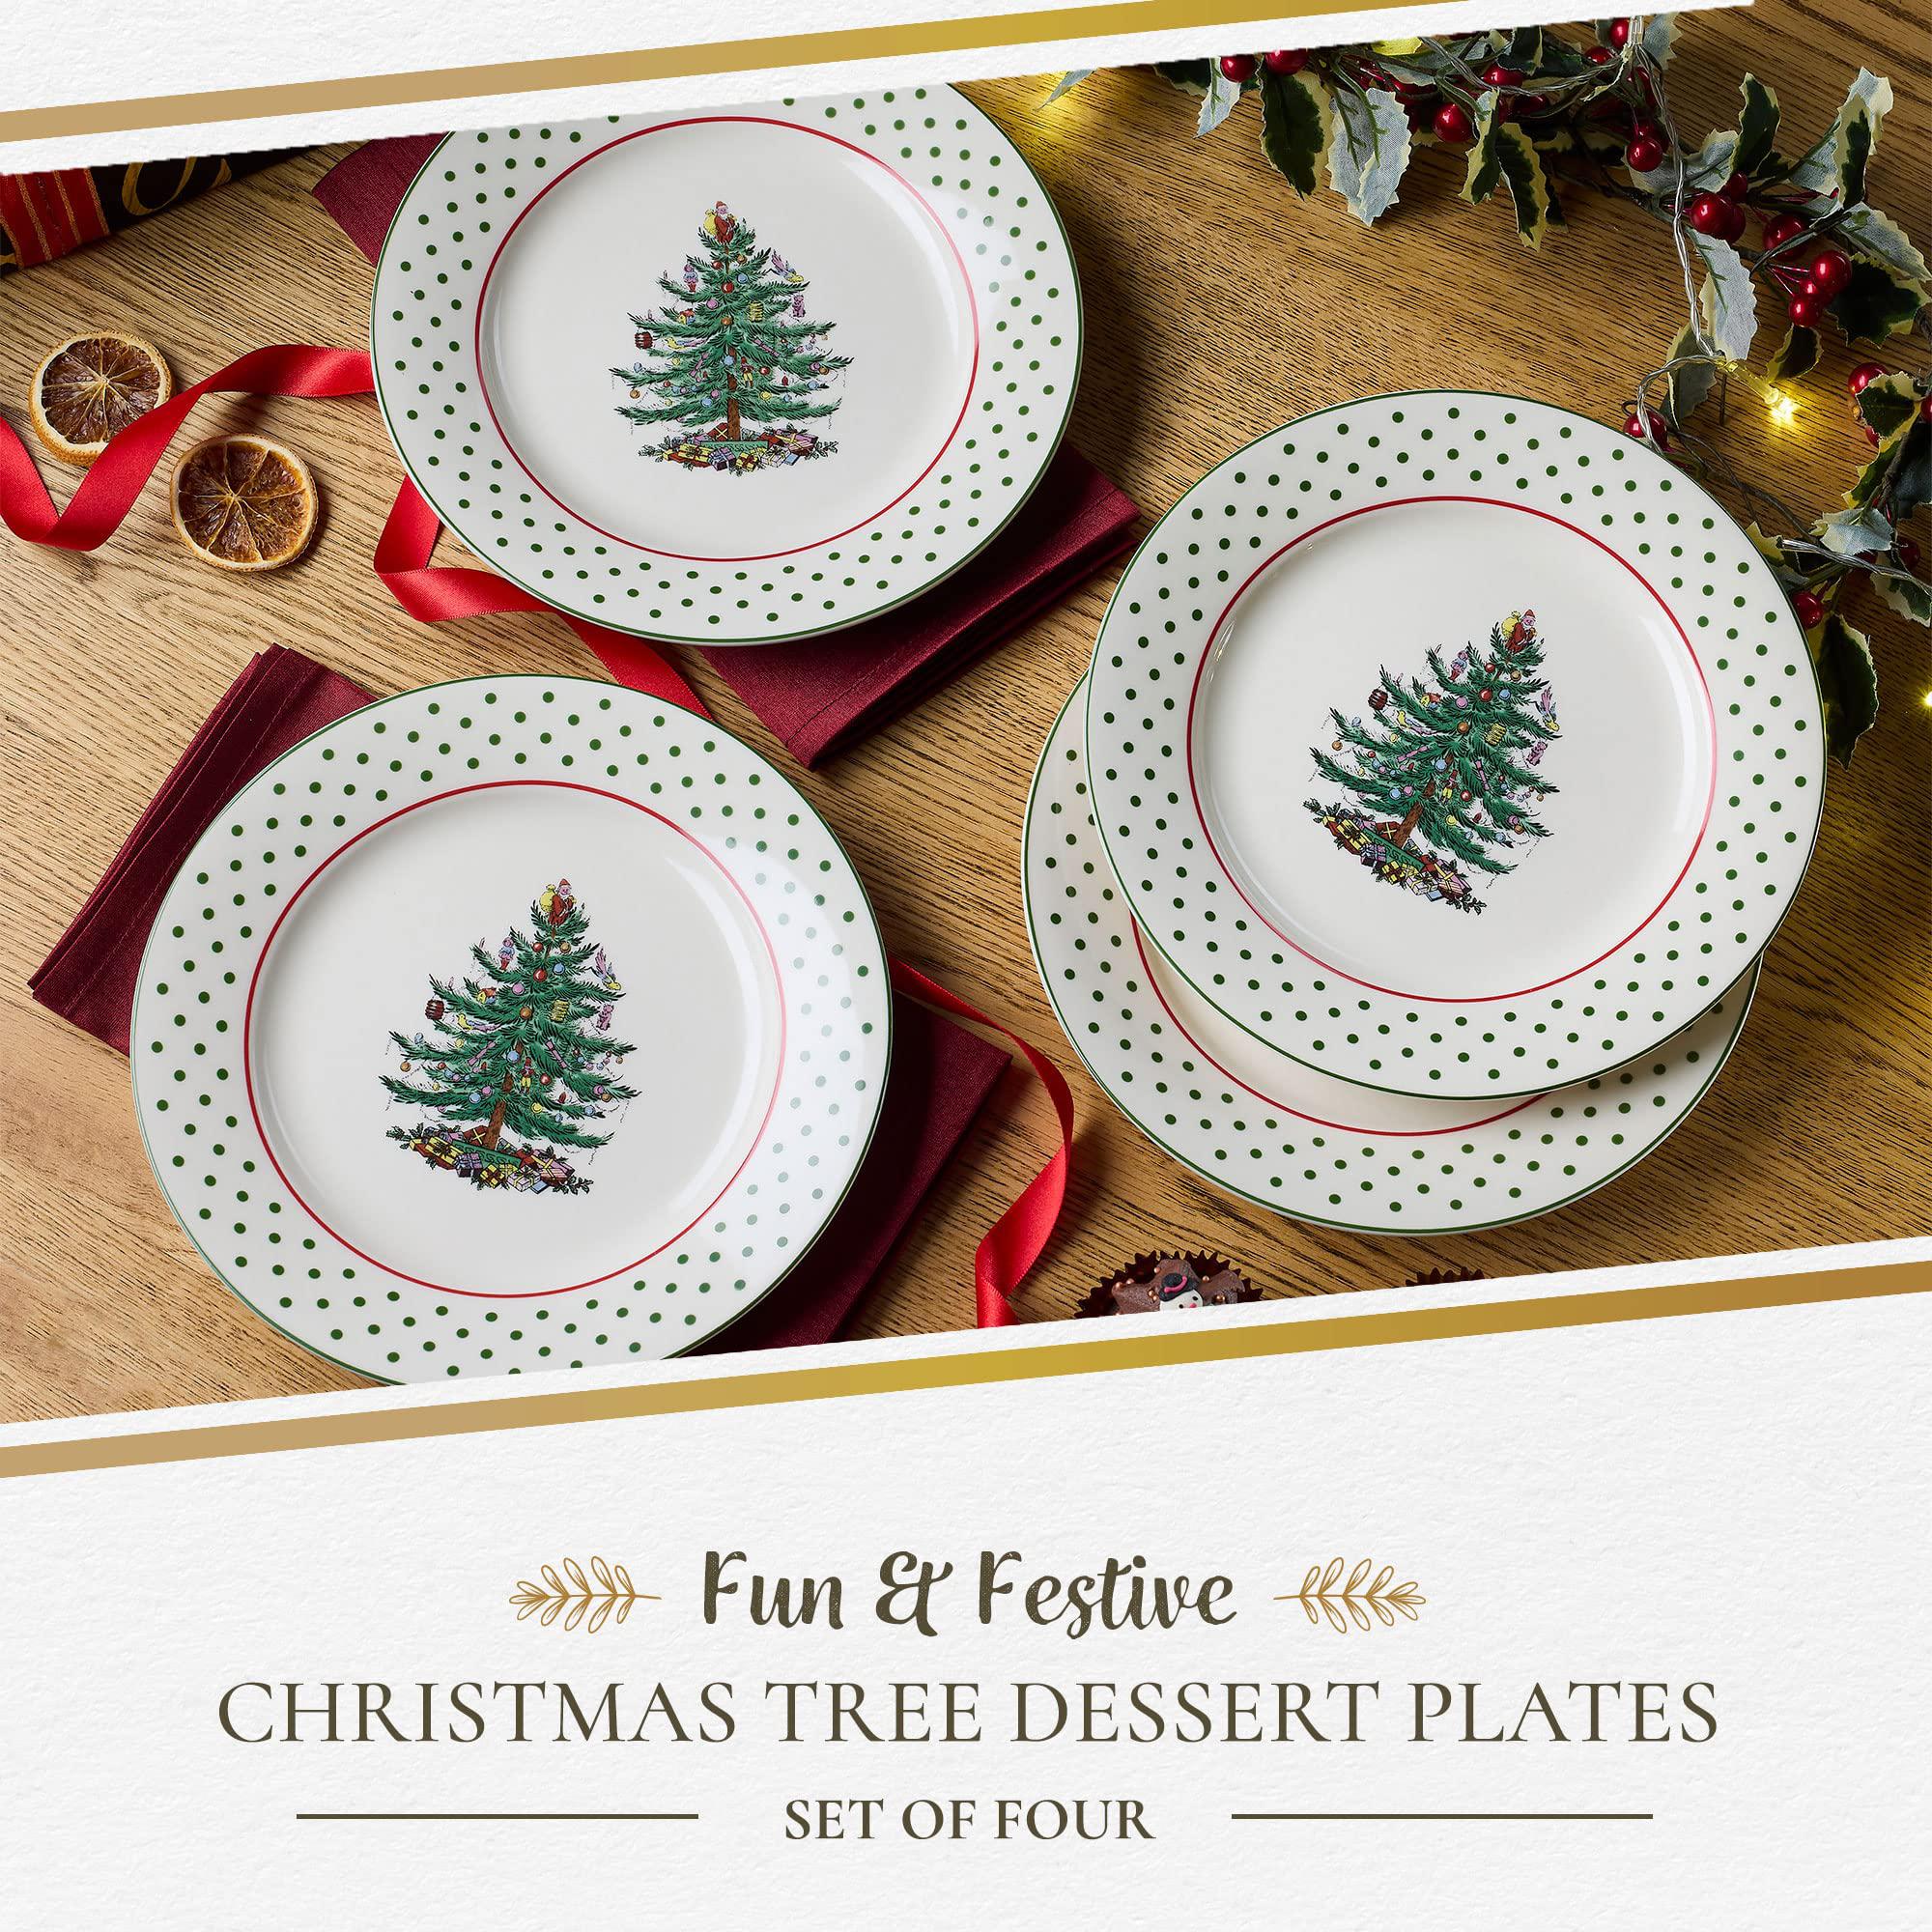 Portmeirion spode christmas tree collection dessert plates, set of 4, polka dot design, use for dessert, appetizers, or salad, measures a